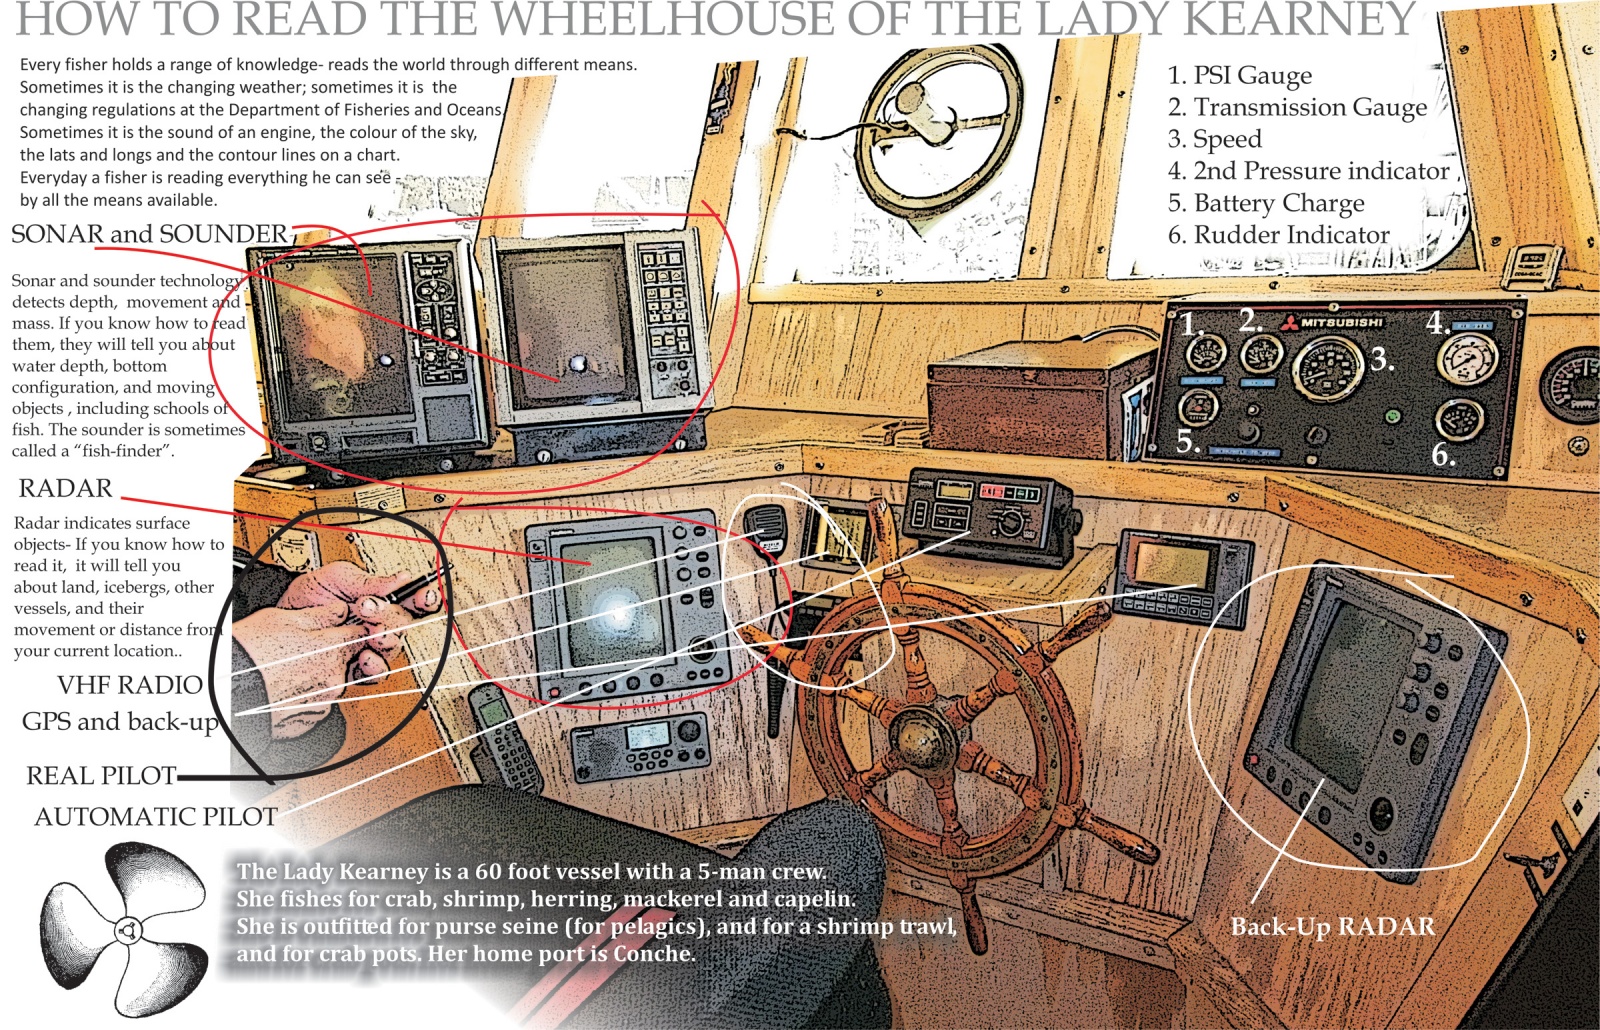 How to Read the Wheelhouse of the Lady Kearney